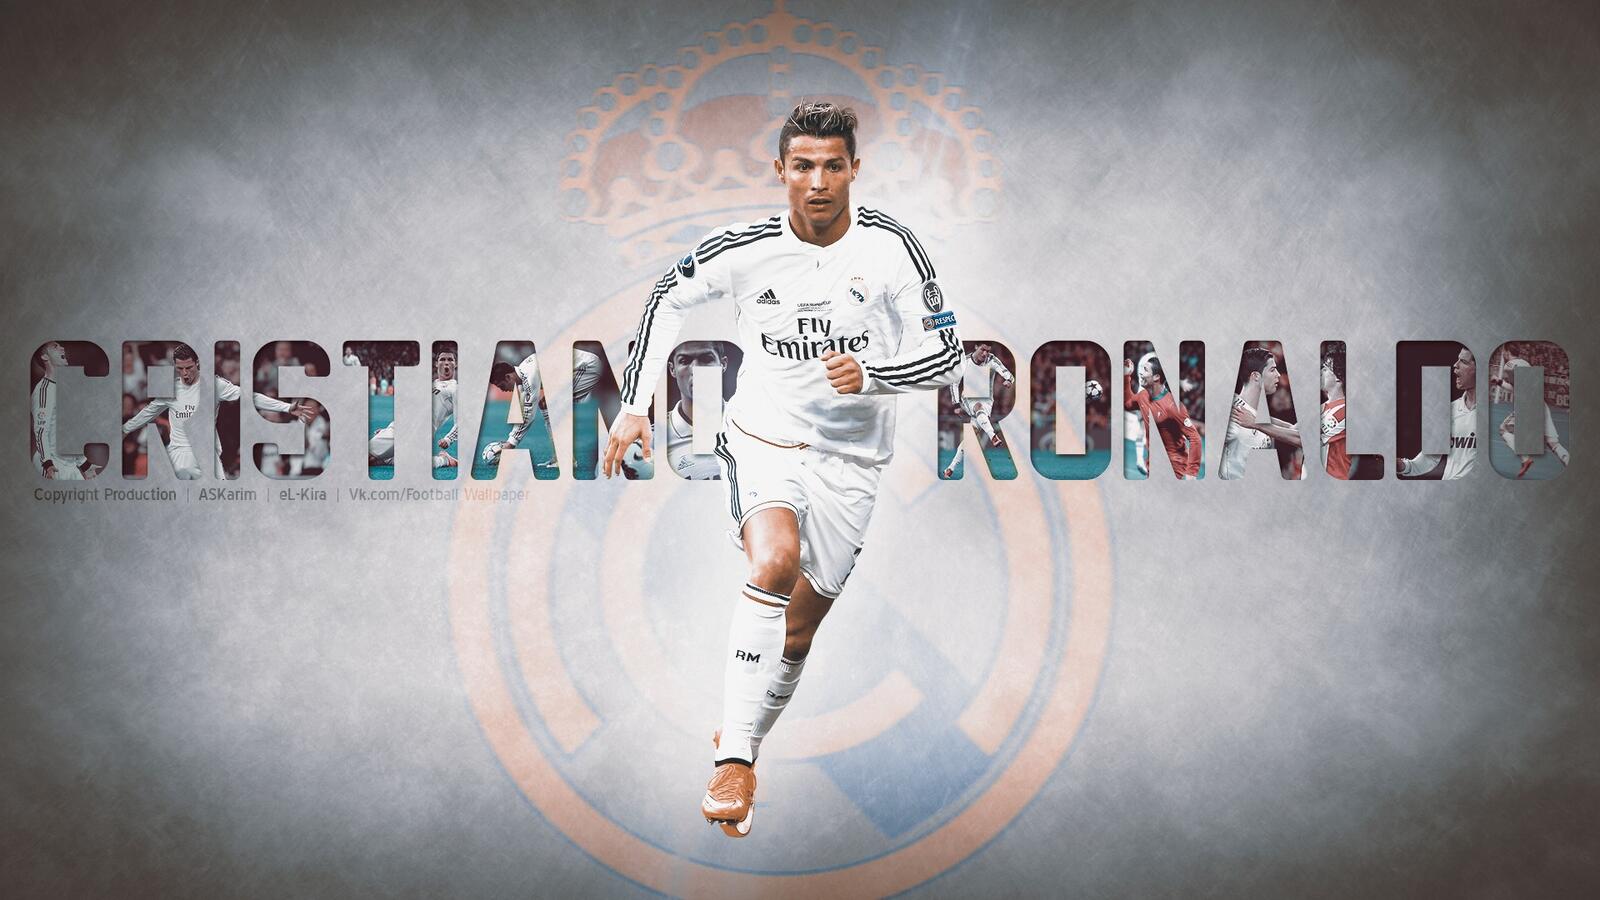 Wallpapers photos Real Madrid Cristiano Ronaldo on the desktop